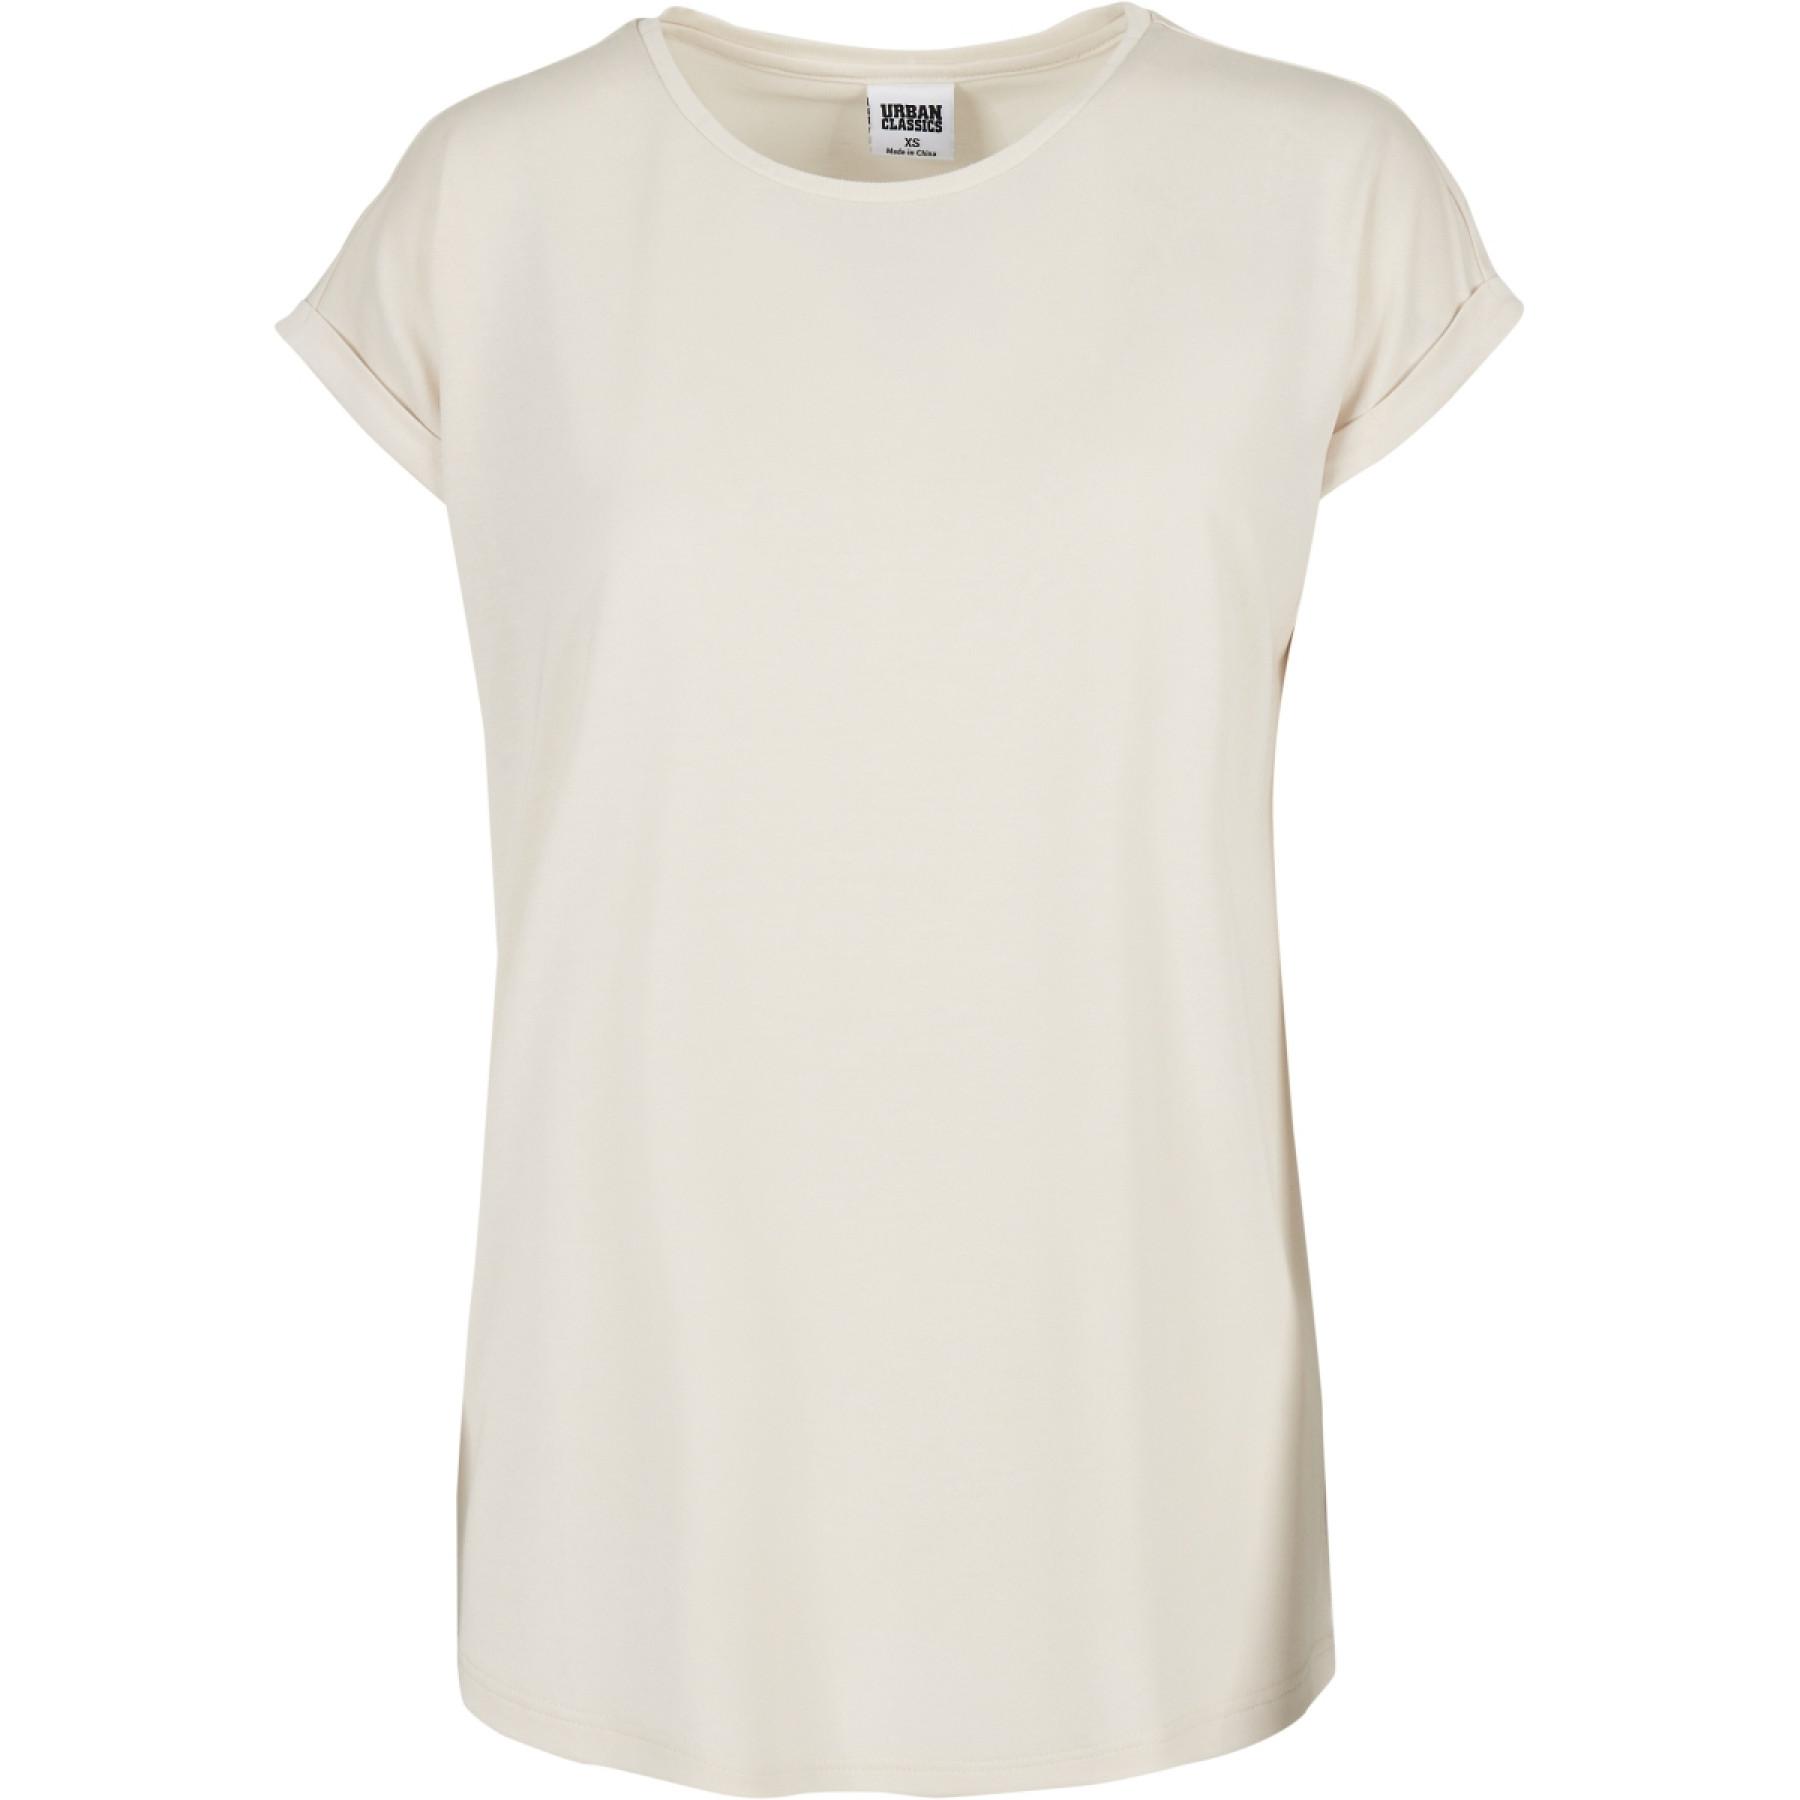 Women's T-shirt Urban Classics modal extended shoulder- large sizes